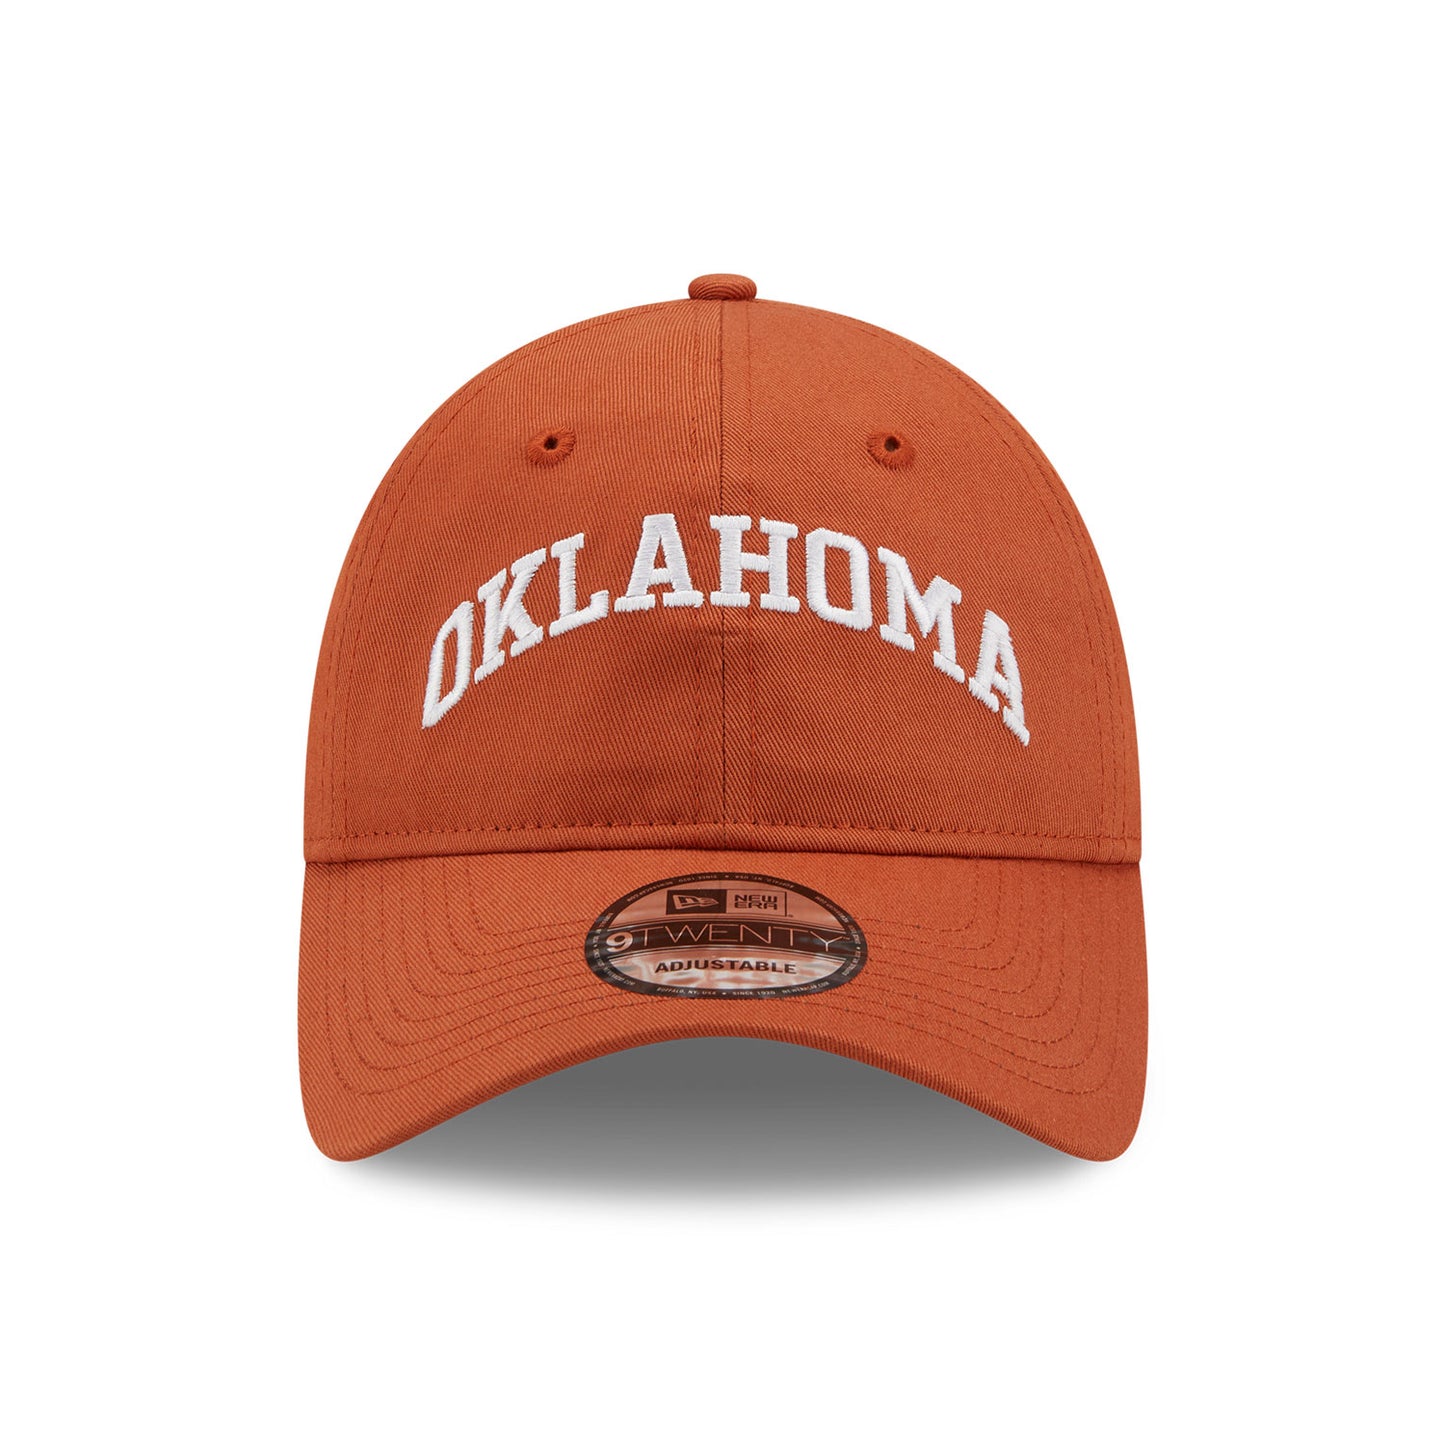 Oklahoma 9TWENTY New Era Cap burnt orange